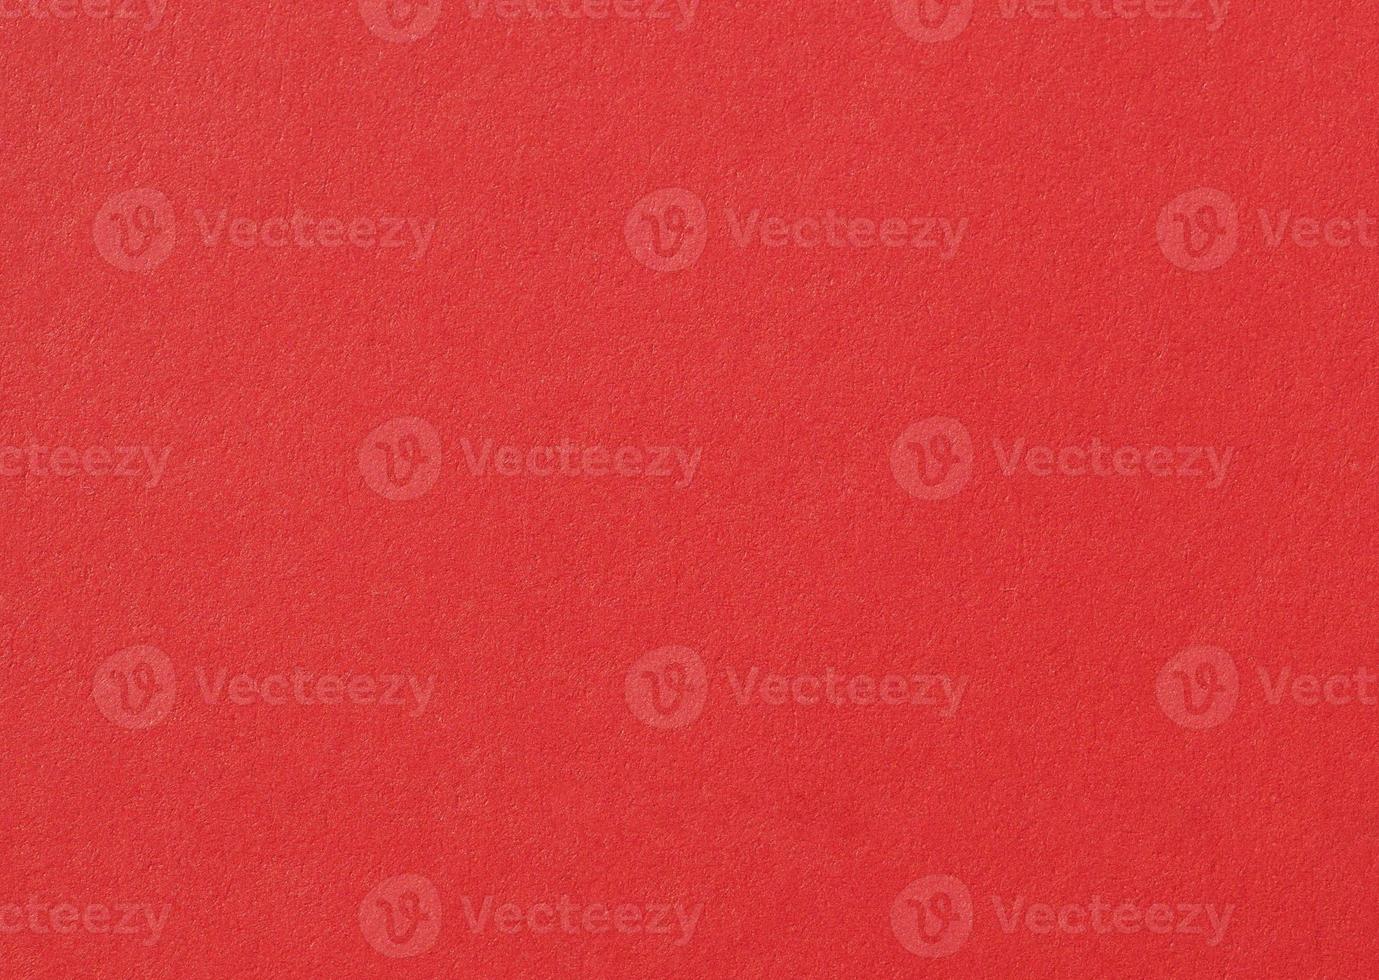 rött papper textur bakgrund foto